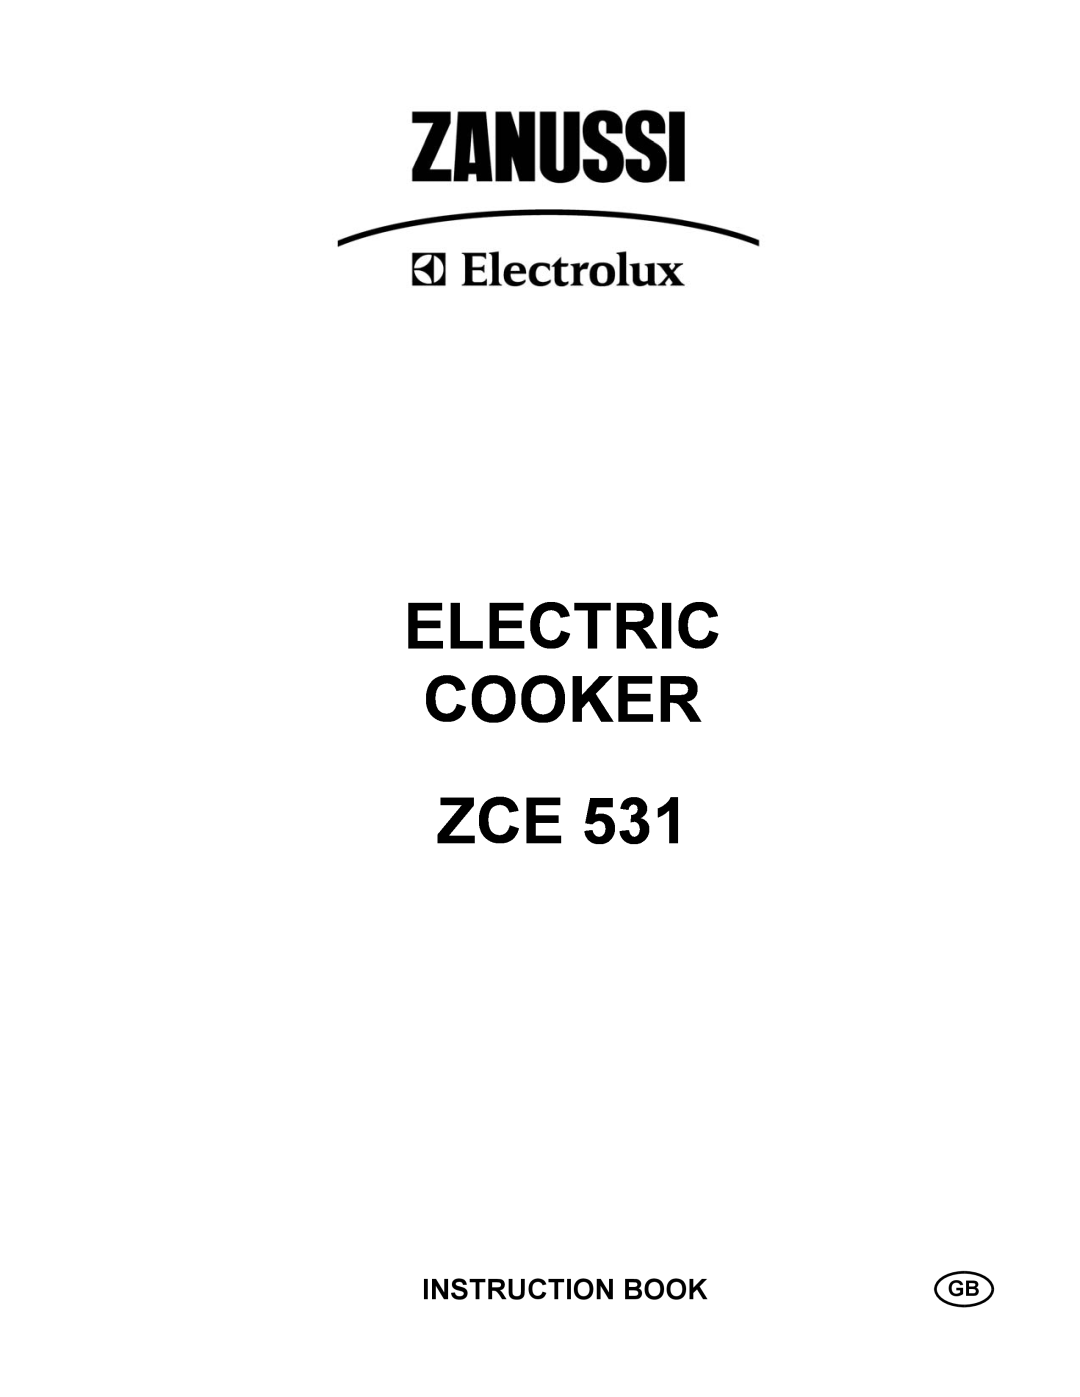 Zanussi ZCE 531 GB manual Instruction Book, Electric Cooker Zce 